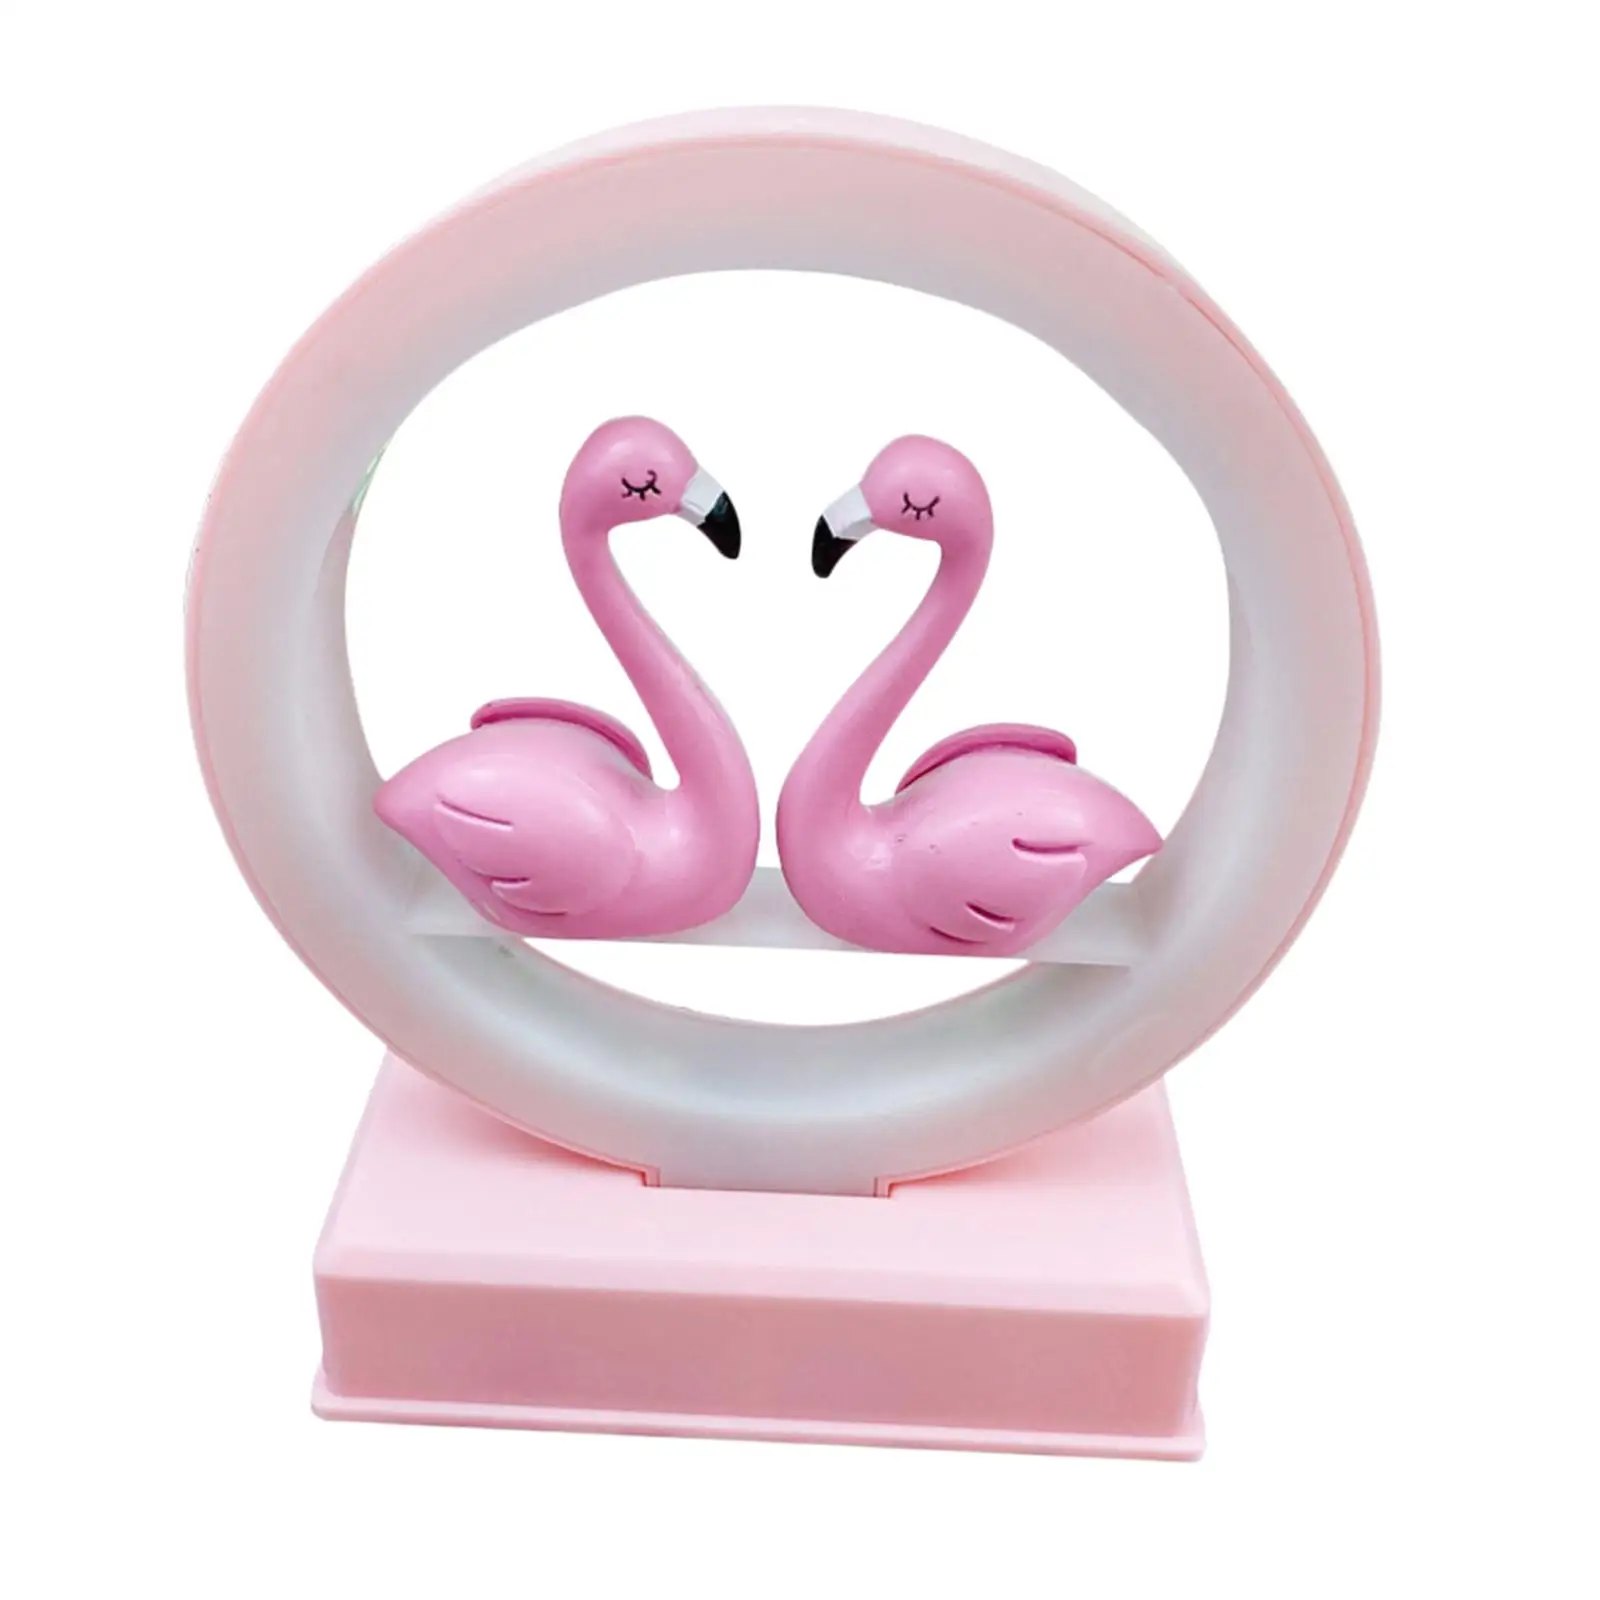 LED Flamingo Night Light with Music Desk Lamp for Dorm Gift Decoration